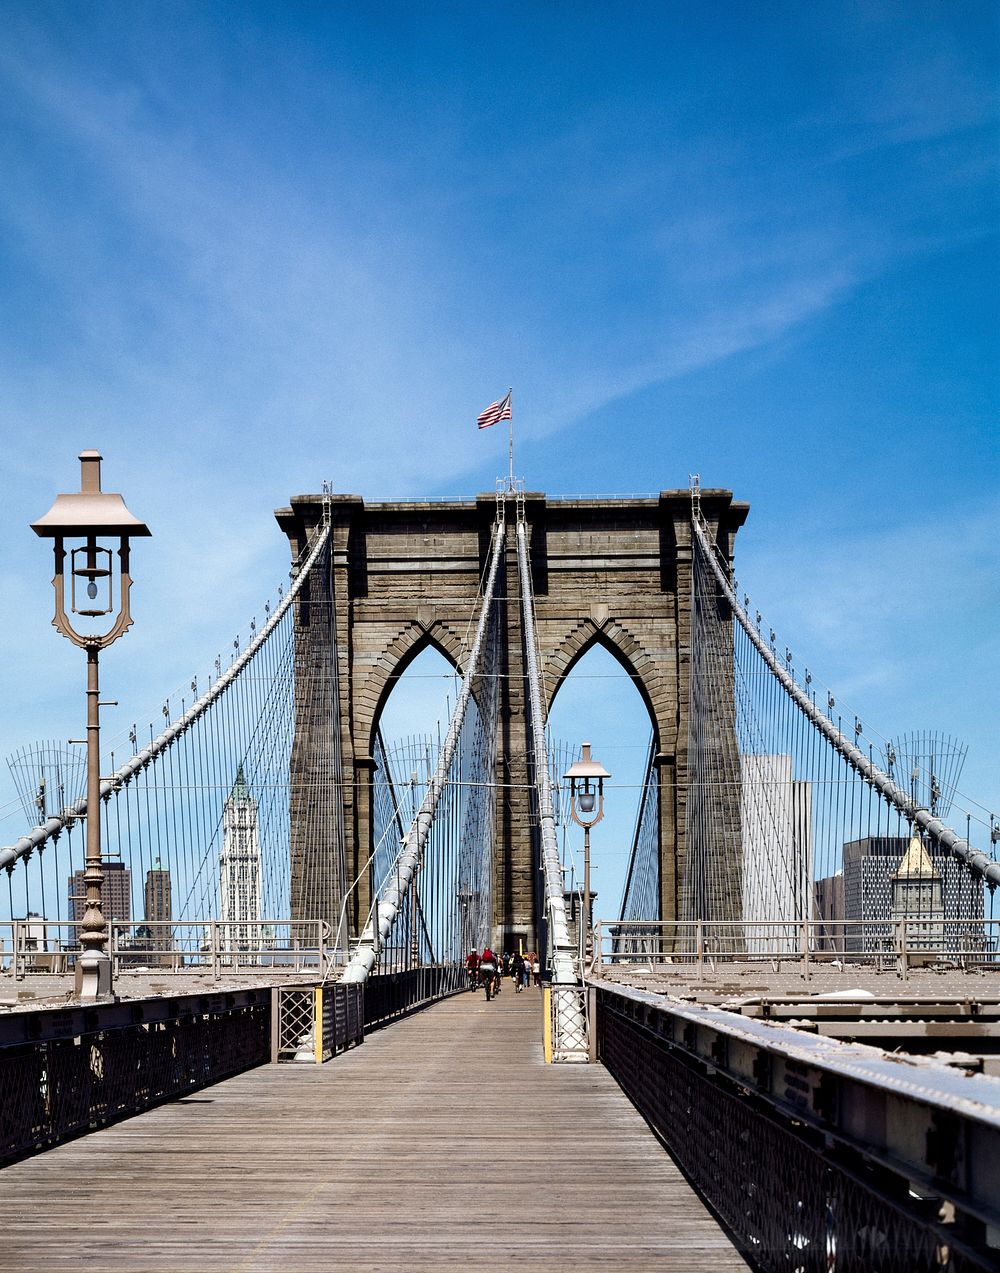 New York City Brooklyn Bridge, USA - Original image from Carol M. Highsmith&rsquo;s America, Library of Congress collection.…